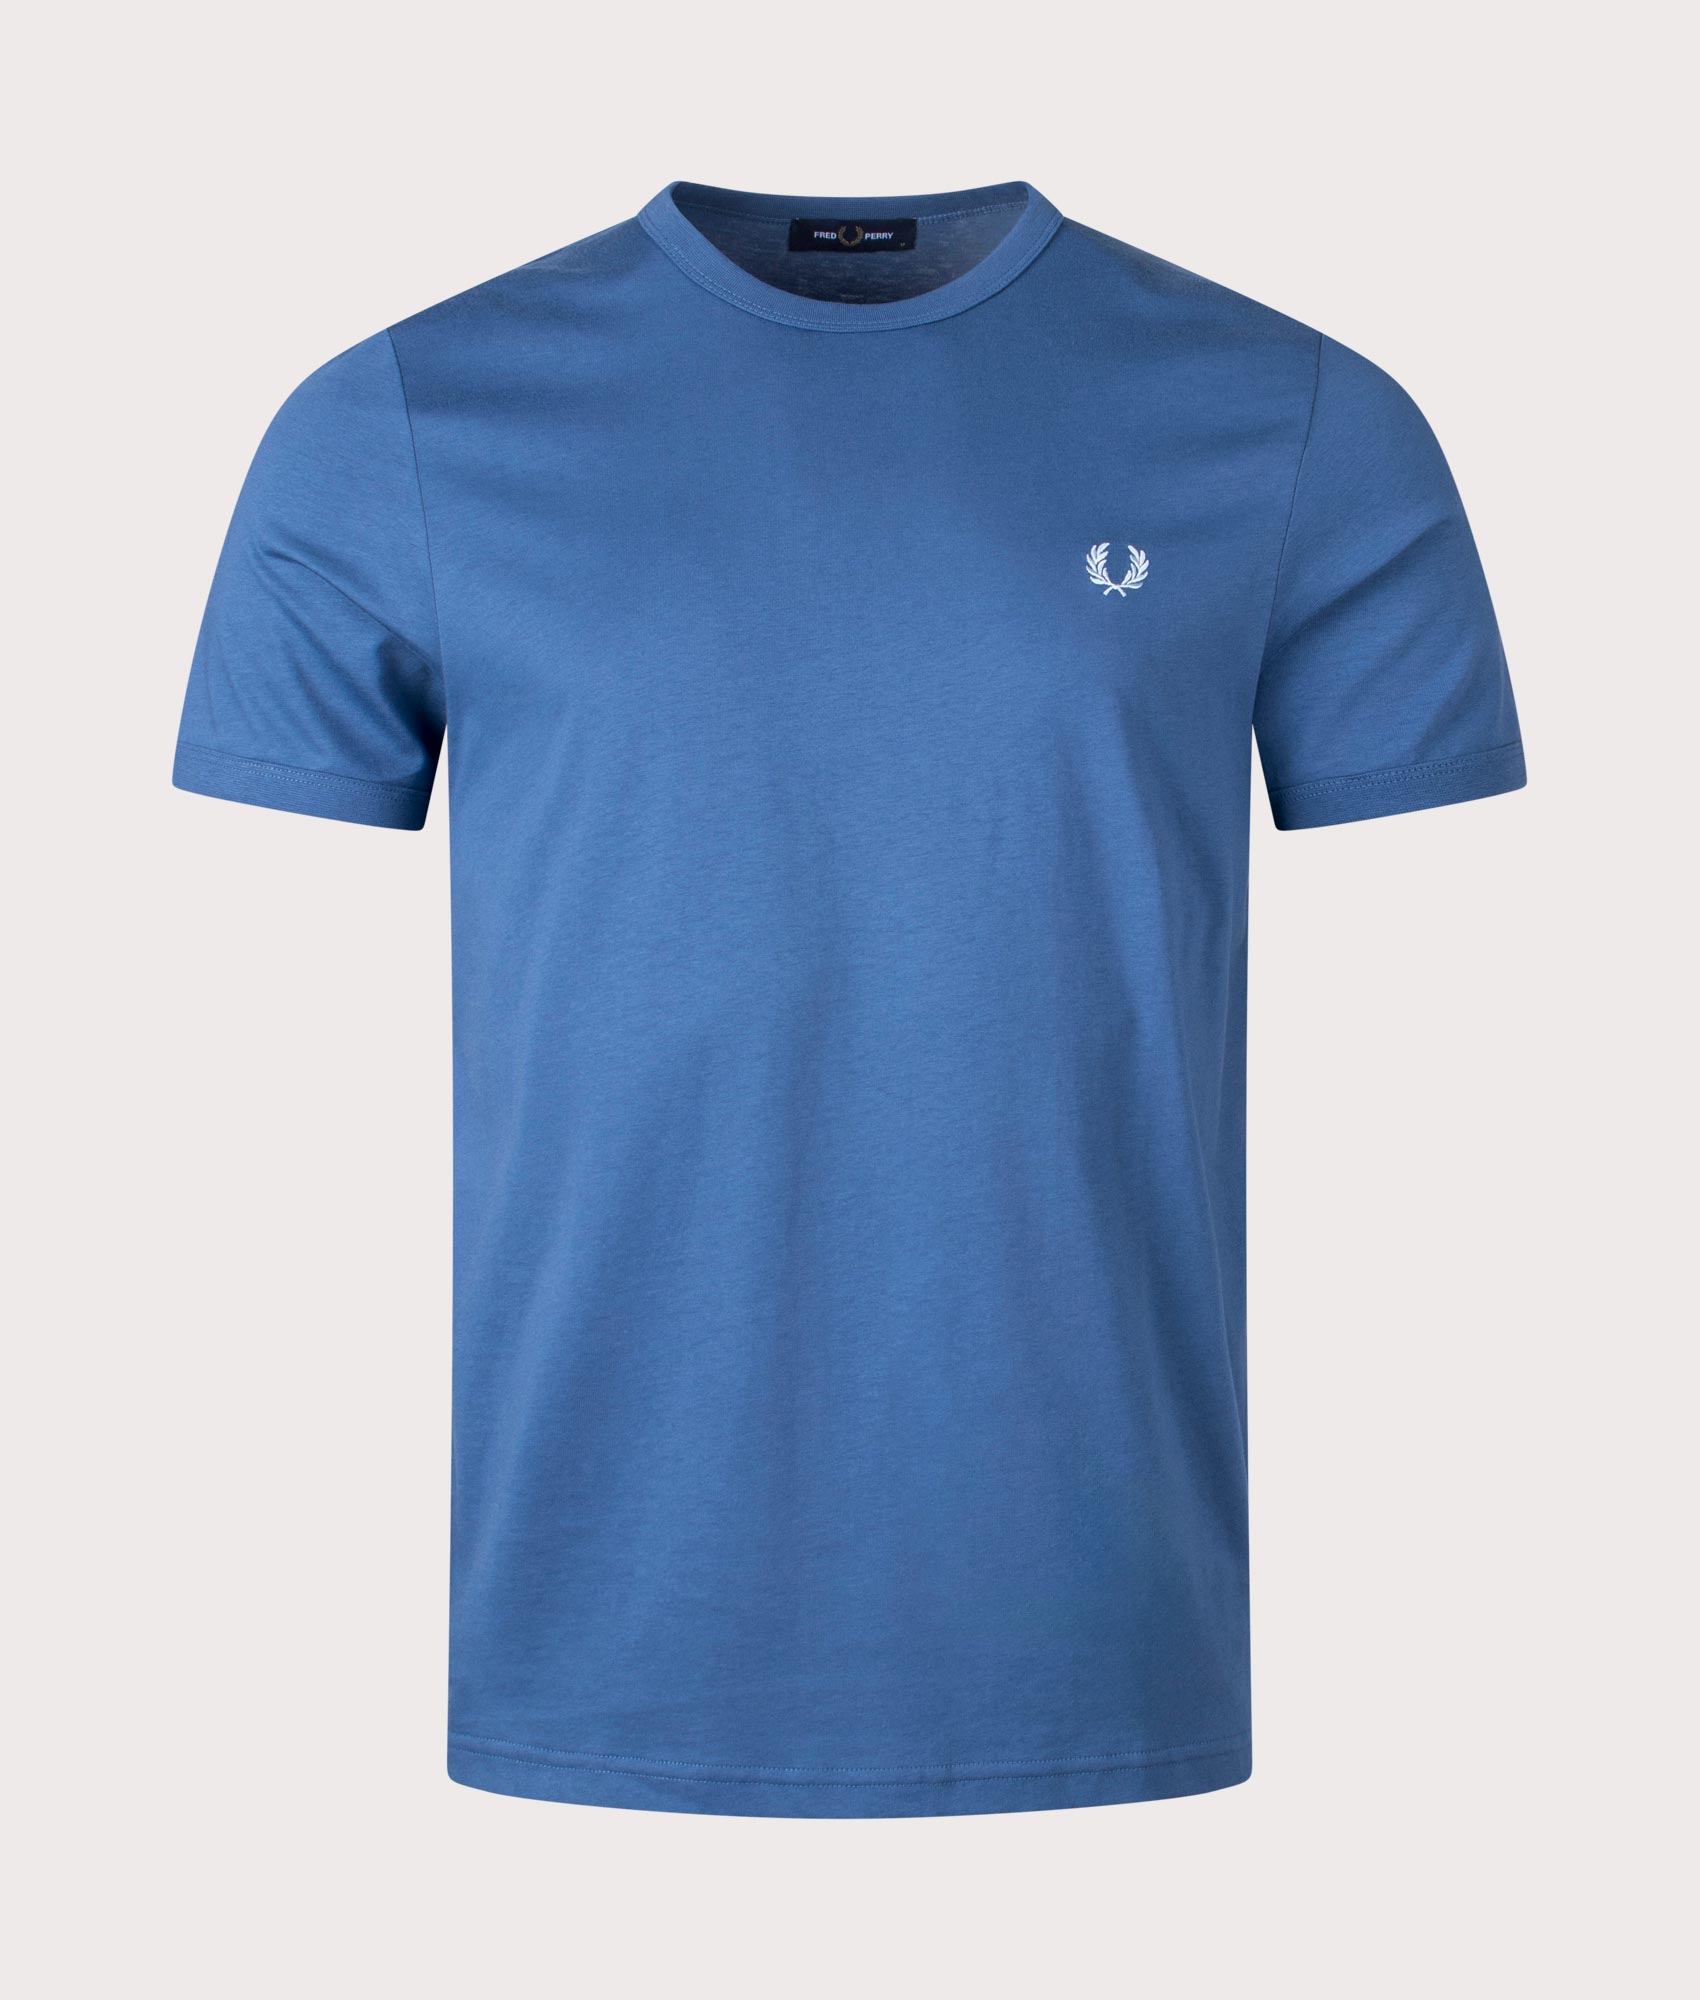 Fred Perry Mens Ringer T-Shirt - Colour: V06 Midnight Blue/Light Ice - Size: Medium